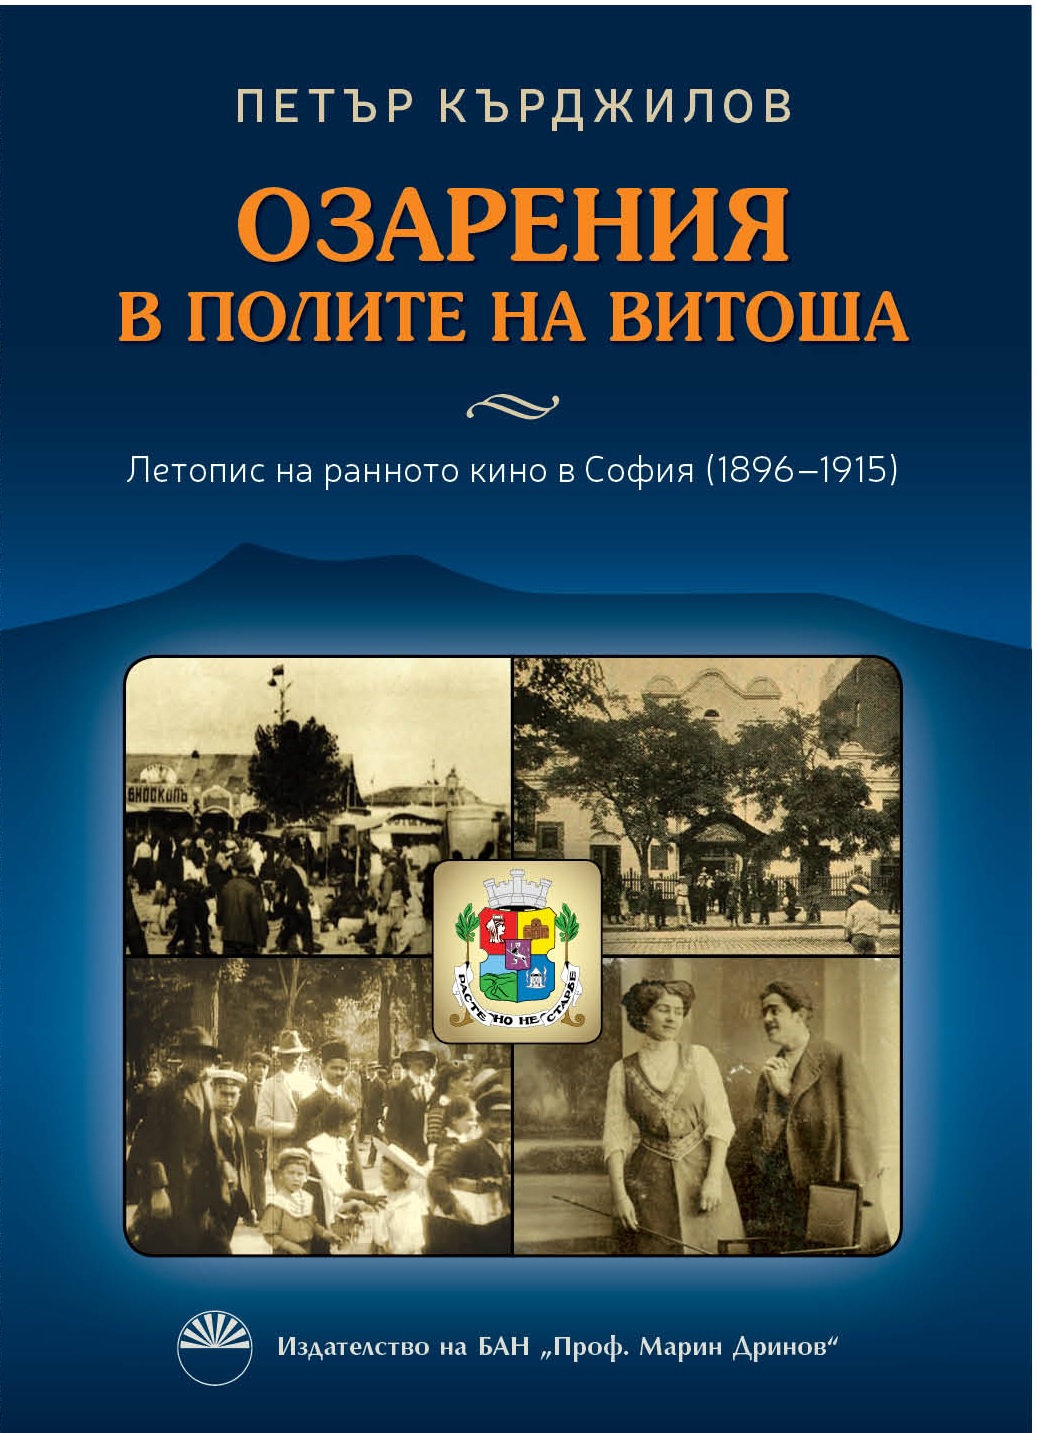 Sofia-bok-cover-3-1.jpg